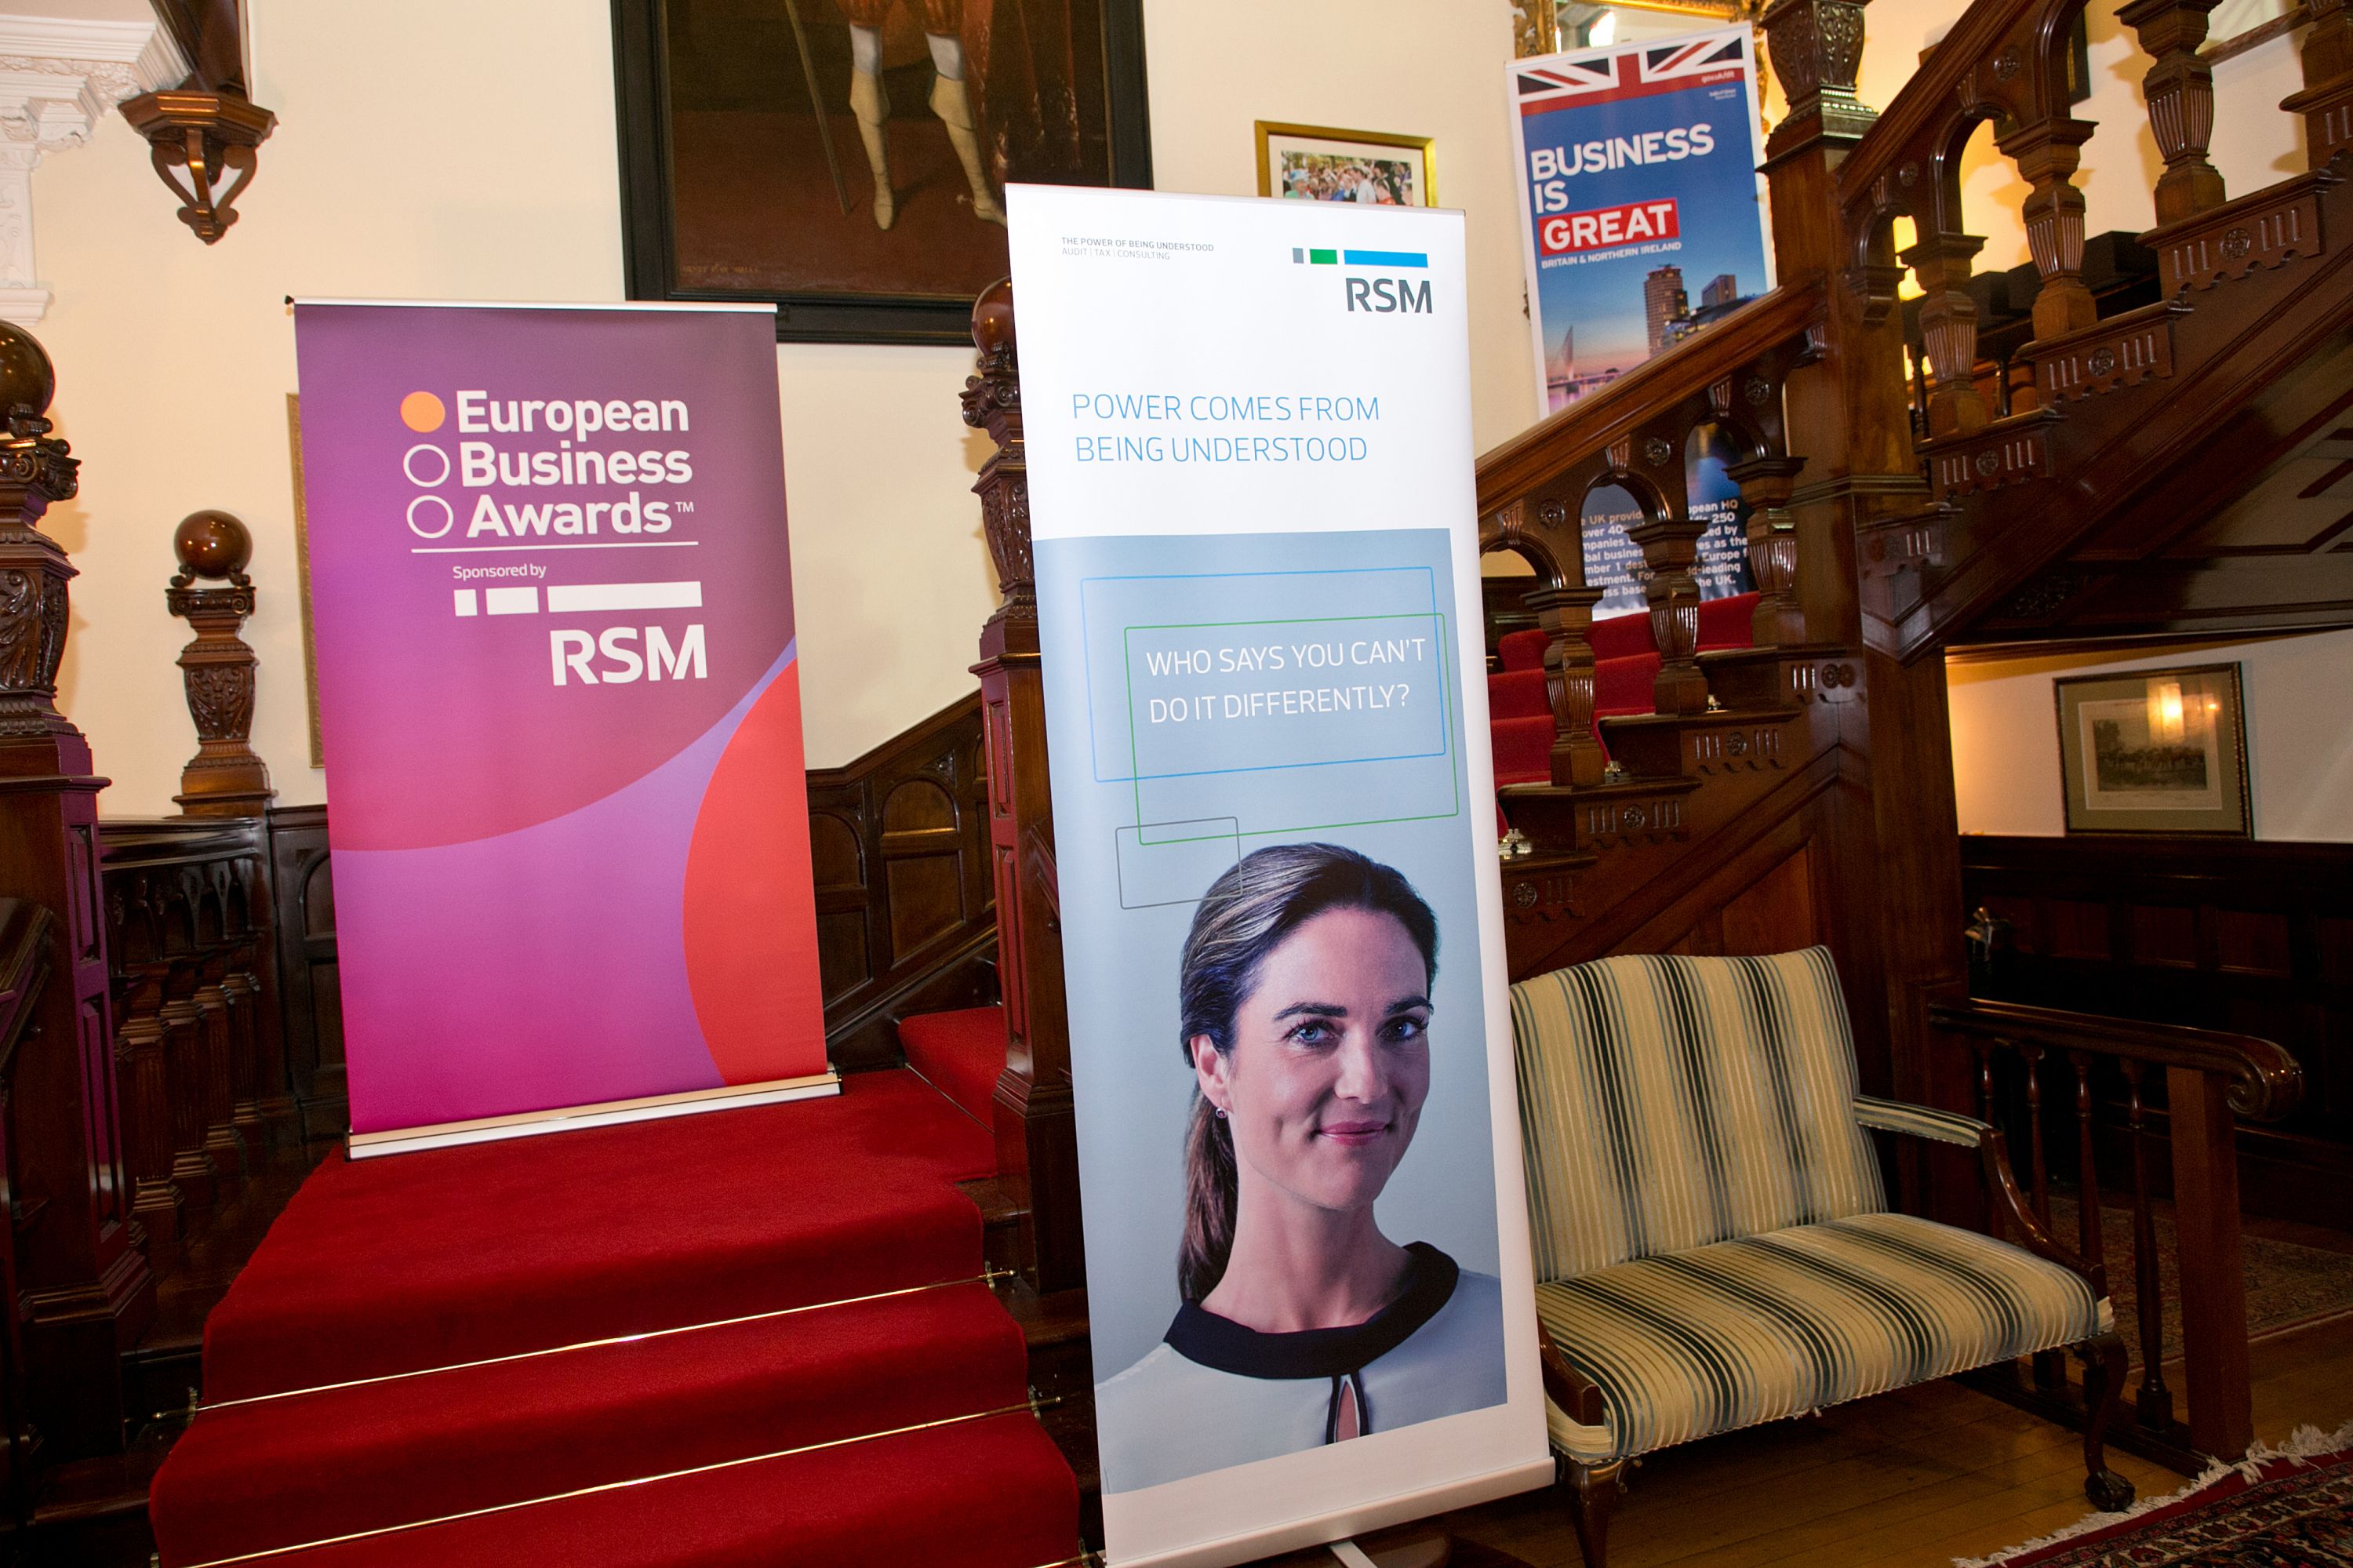 European Business Awards sponsored by RSM